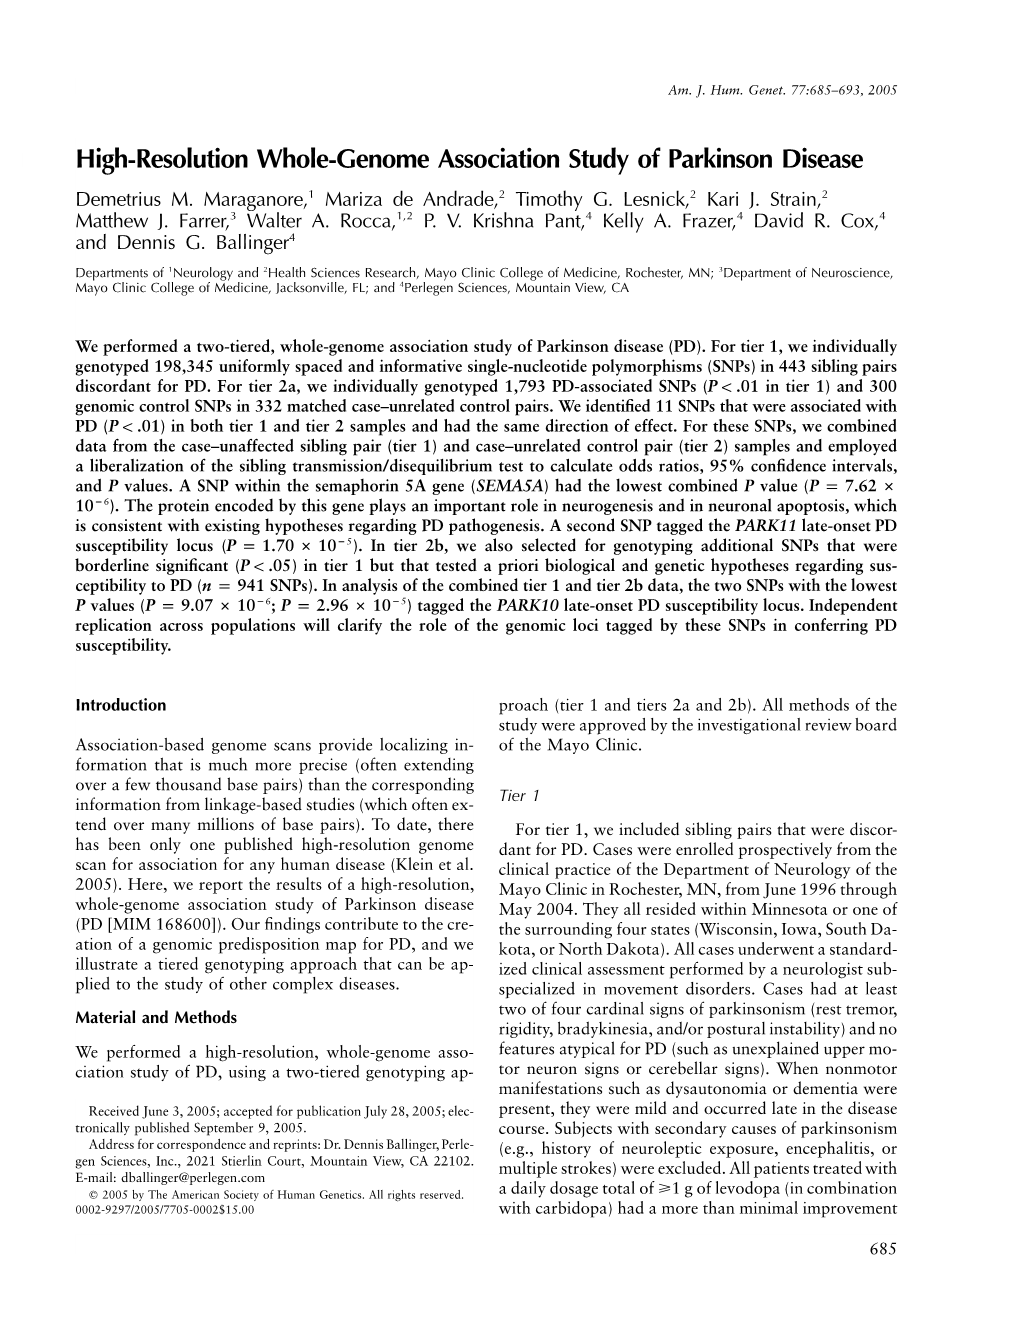 High-Resolution Whole-Genome Association Study of Parkinson Disease Demetrius M